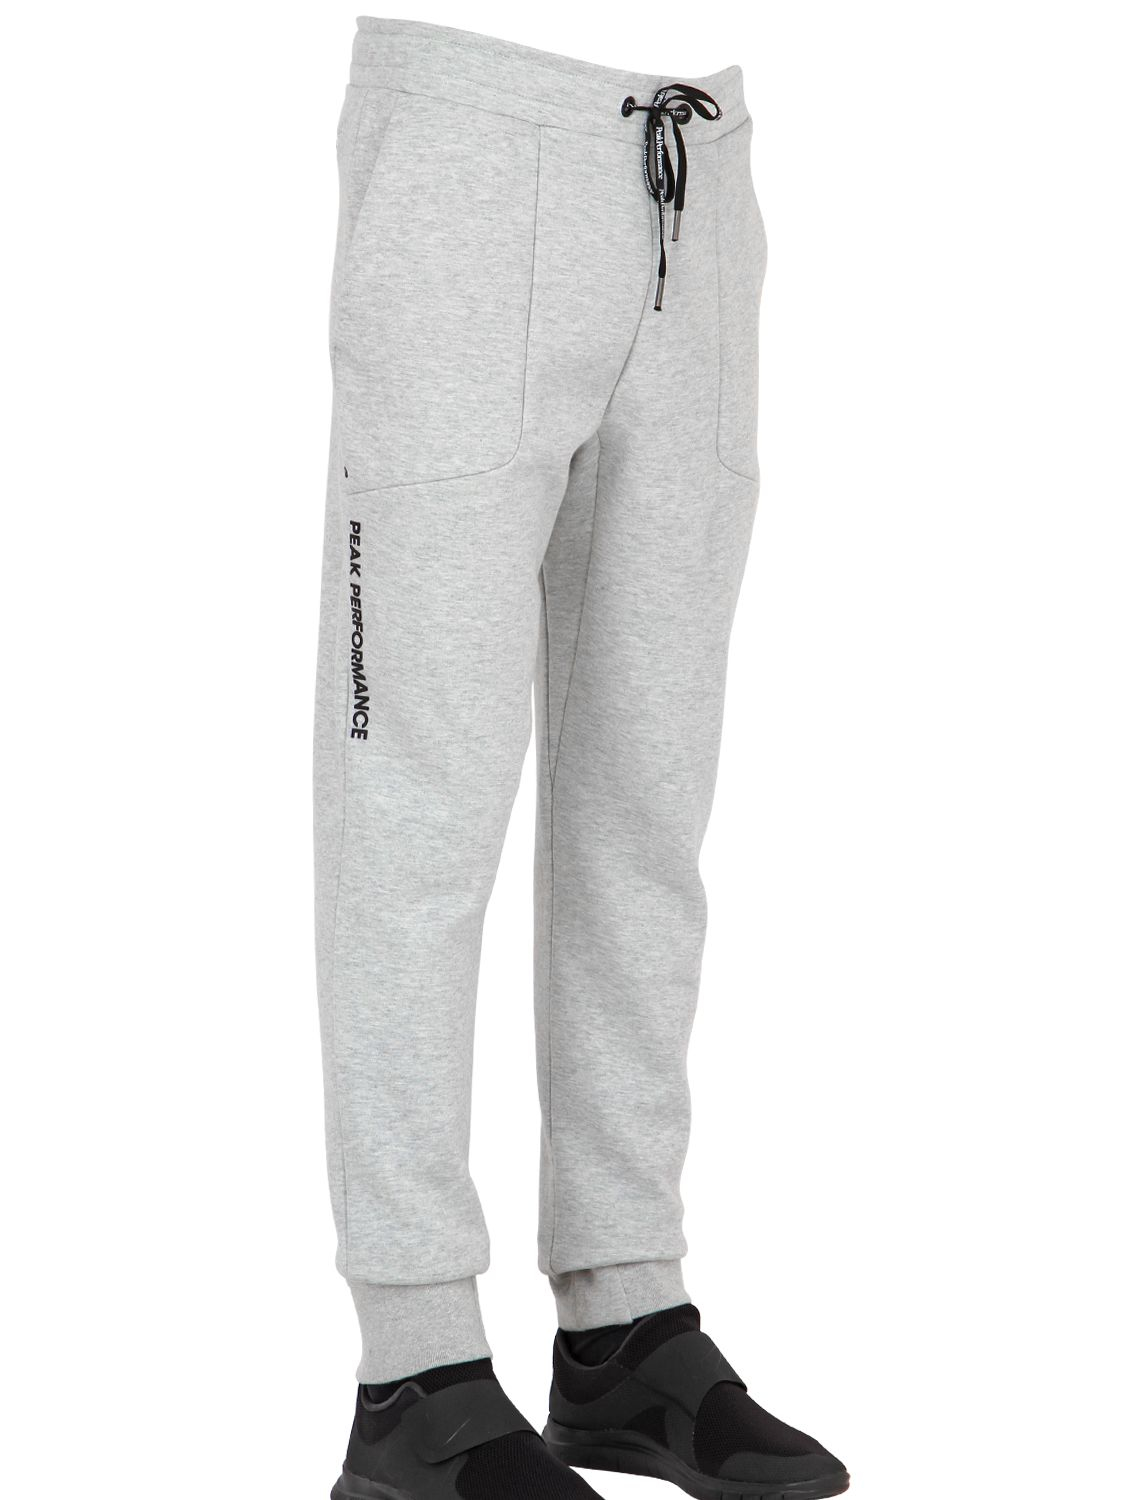 Peak Performance Cotton Blend Jogging Pants in Light Grey (Gray) for Men -  Lyst